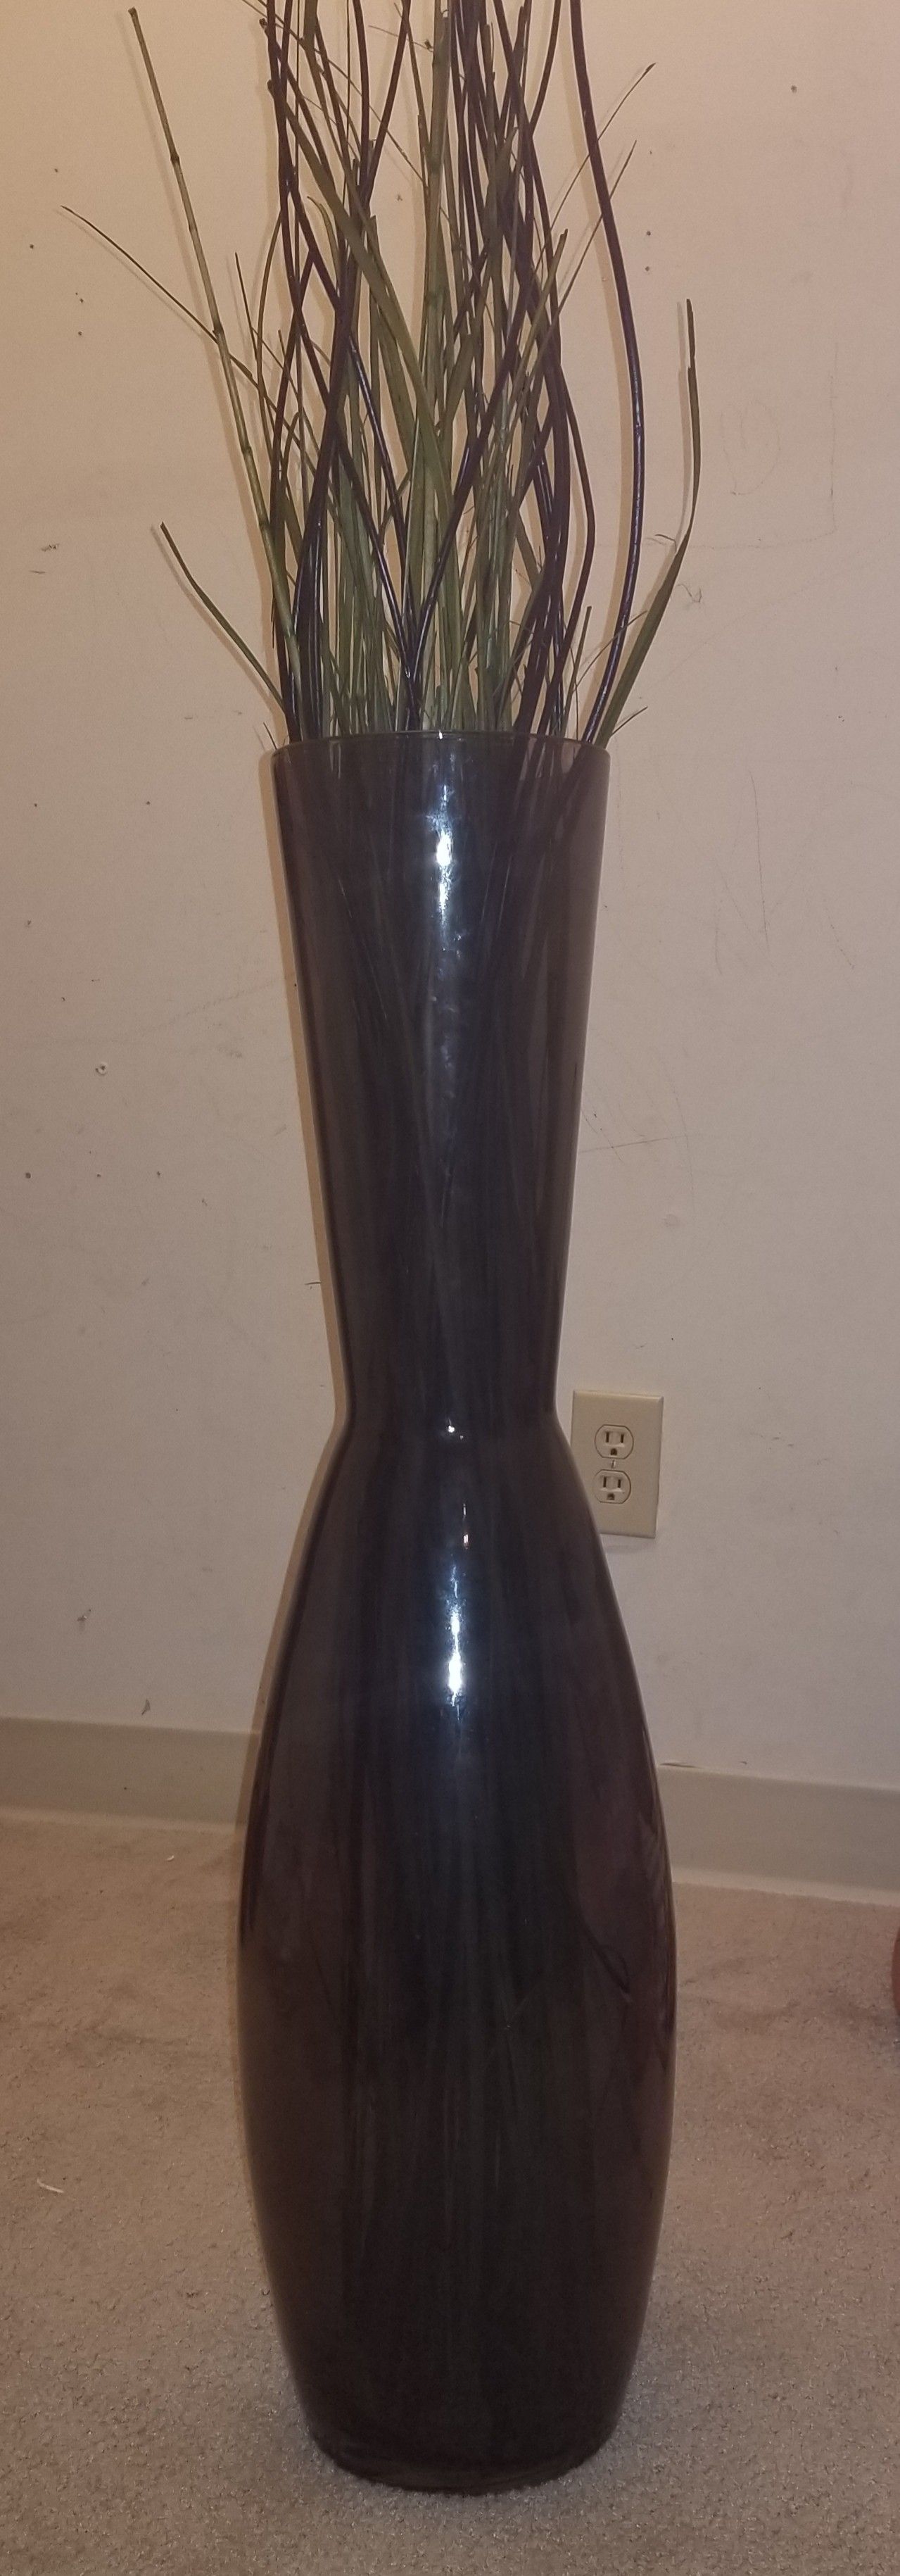 Tall black glass vase